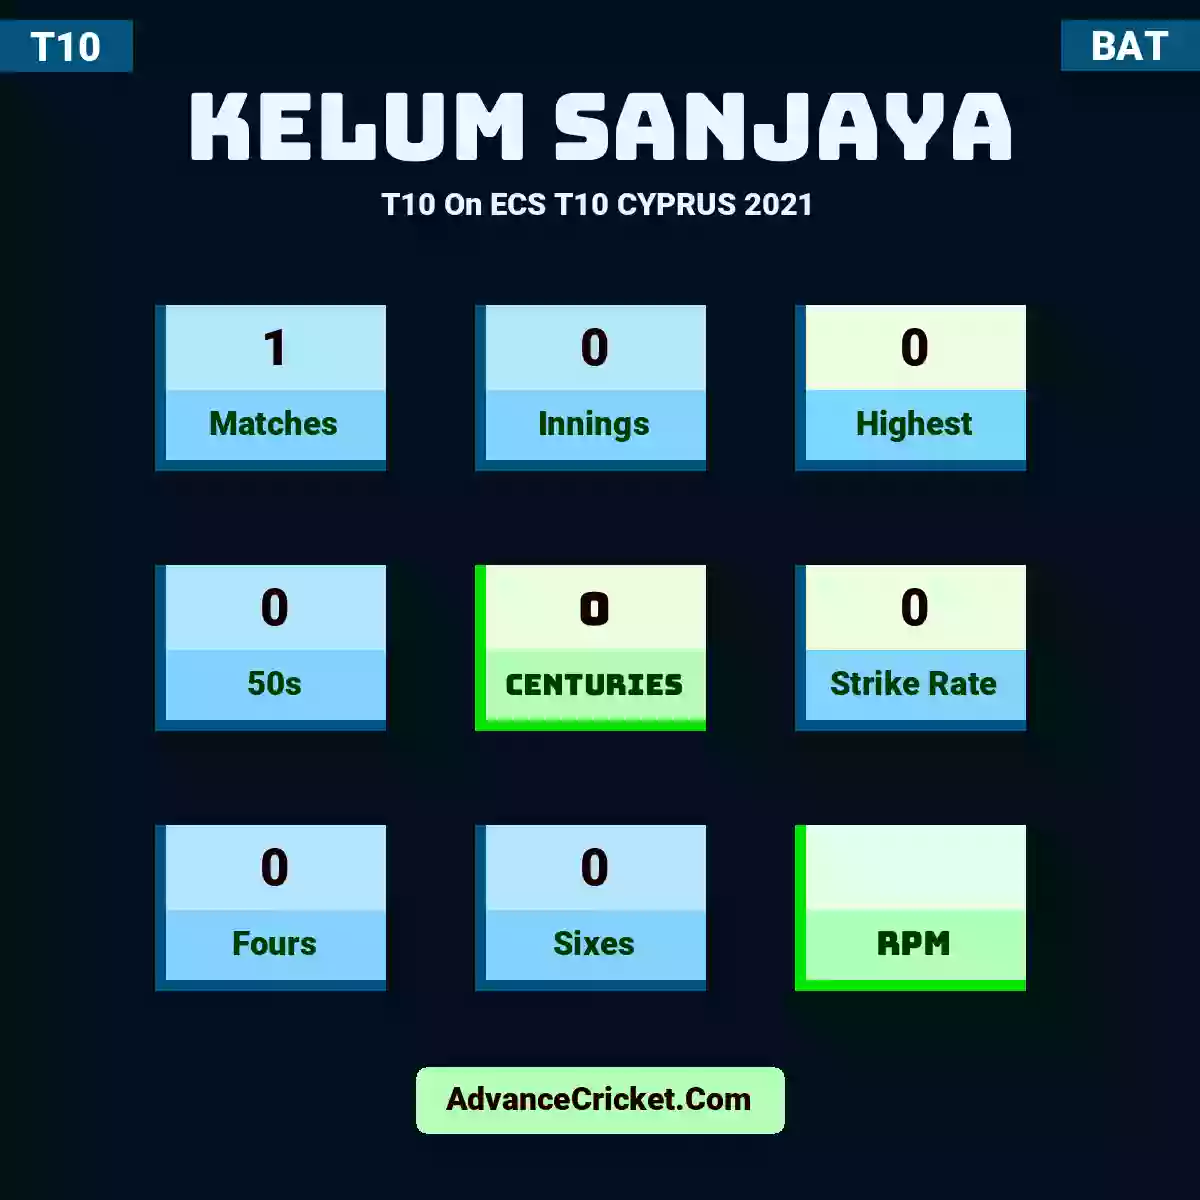 Kelum Sanjaya T10  On ECS T10 CYPRUS 2021, Kelum Sanjaya played 1 matches, scored 0 runs as highest, 0 half-centuries, and 0 centuries, with a strike rate of 0. K.Sanjaya hit 0 fours and 0 sixes.